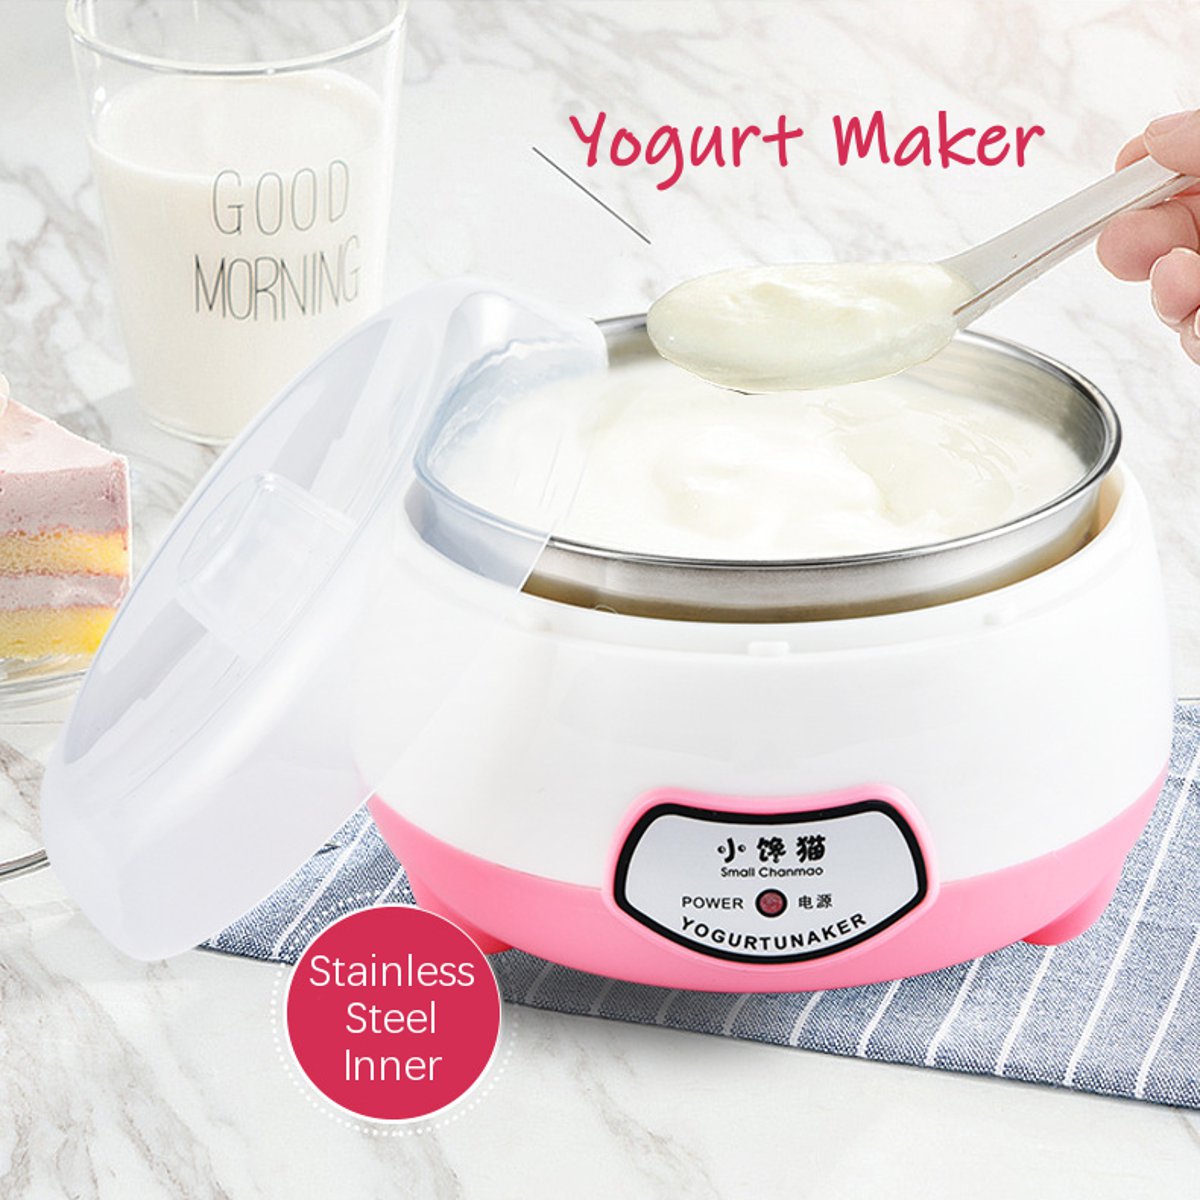 Machine à yaourt ménage petit entièrement automati – Grandado